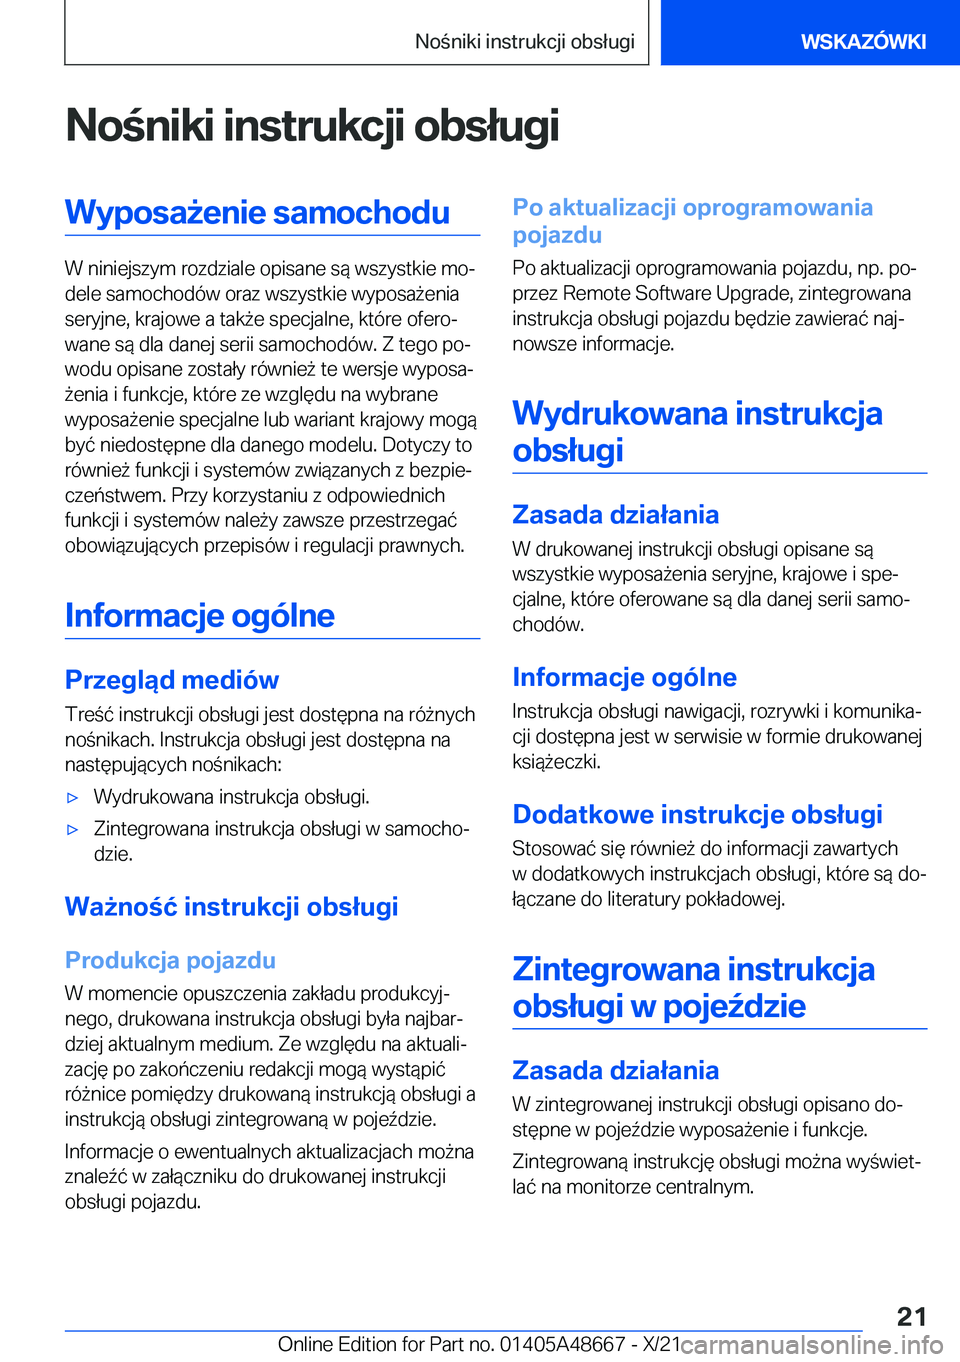 BMW 3 SERIES 2022  Instrukcja obsługi (in Polish) �N�o�n�i�k�i��i�n�s�t�r�u�k�c�j�i��o�b�s�ł�u�g�i�W�y�p�o�s�a9�e�n�i�e��s�a�m�o�c�h�o�d�u
�W��n�i�n�i�e�j�s�z�y�m��r�o�z�d�z�i�a�l�e��o�p�i�s�a�n�e��s�